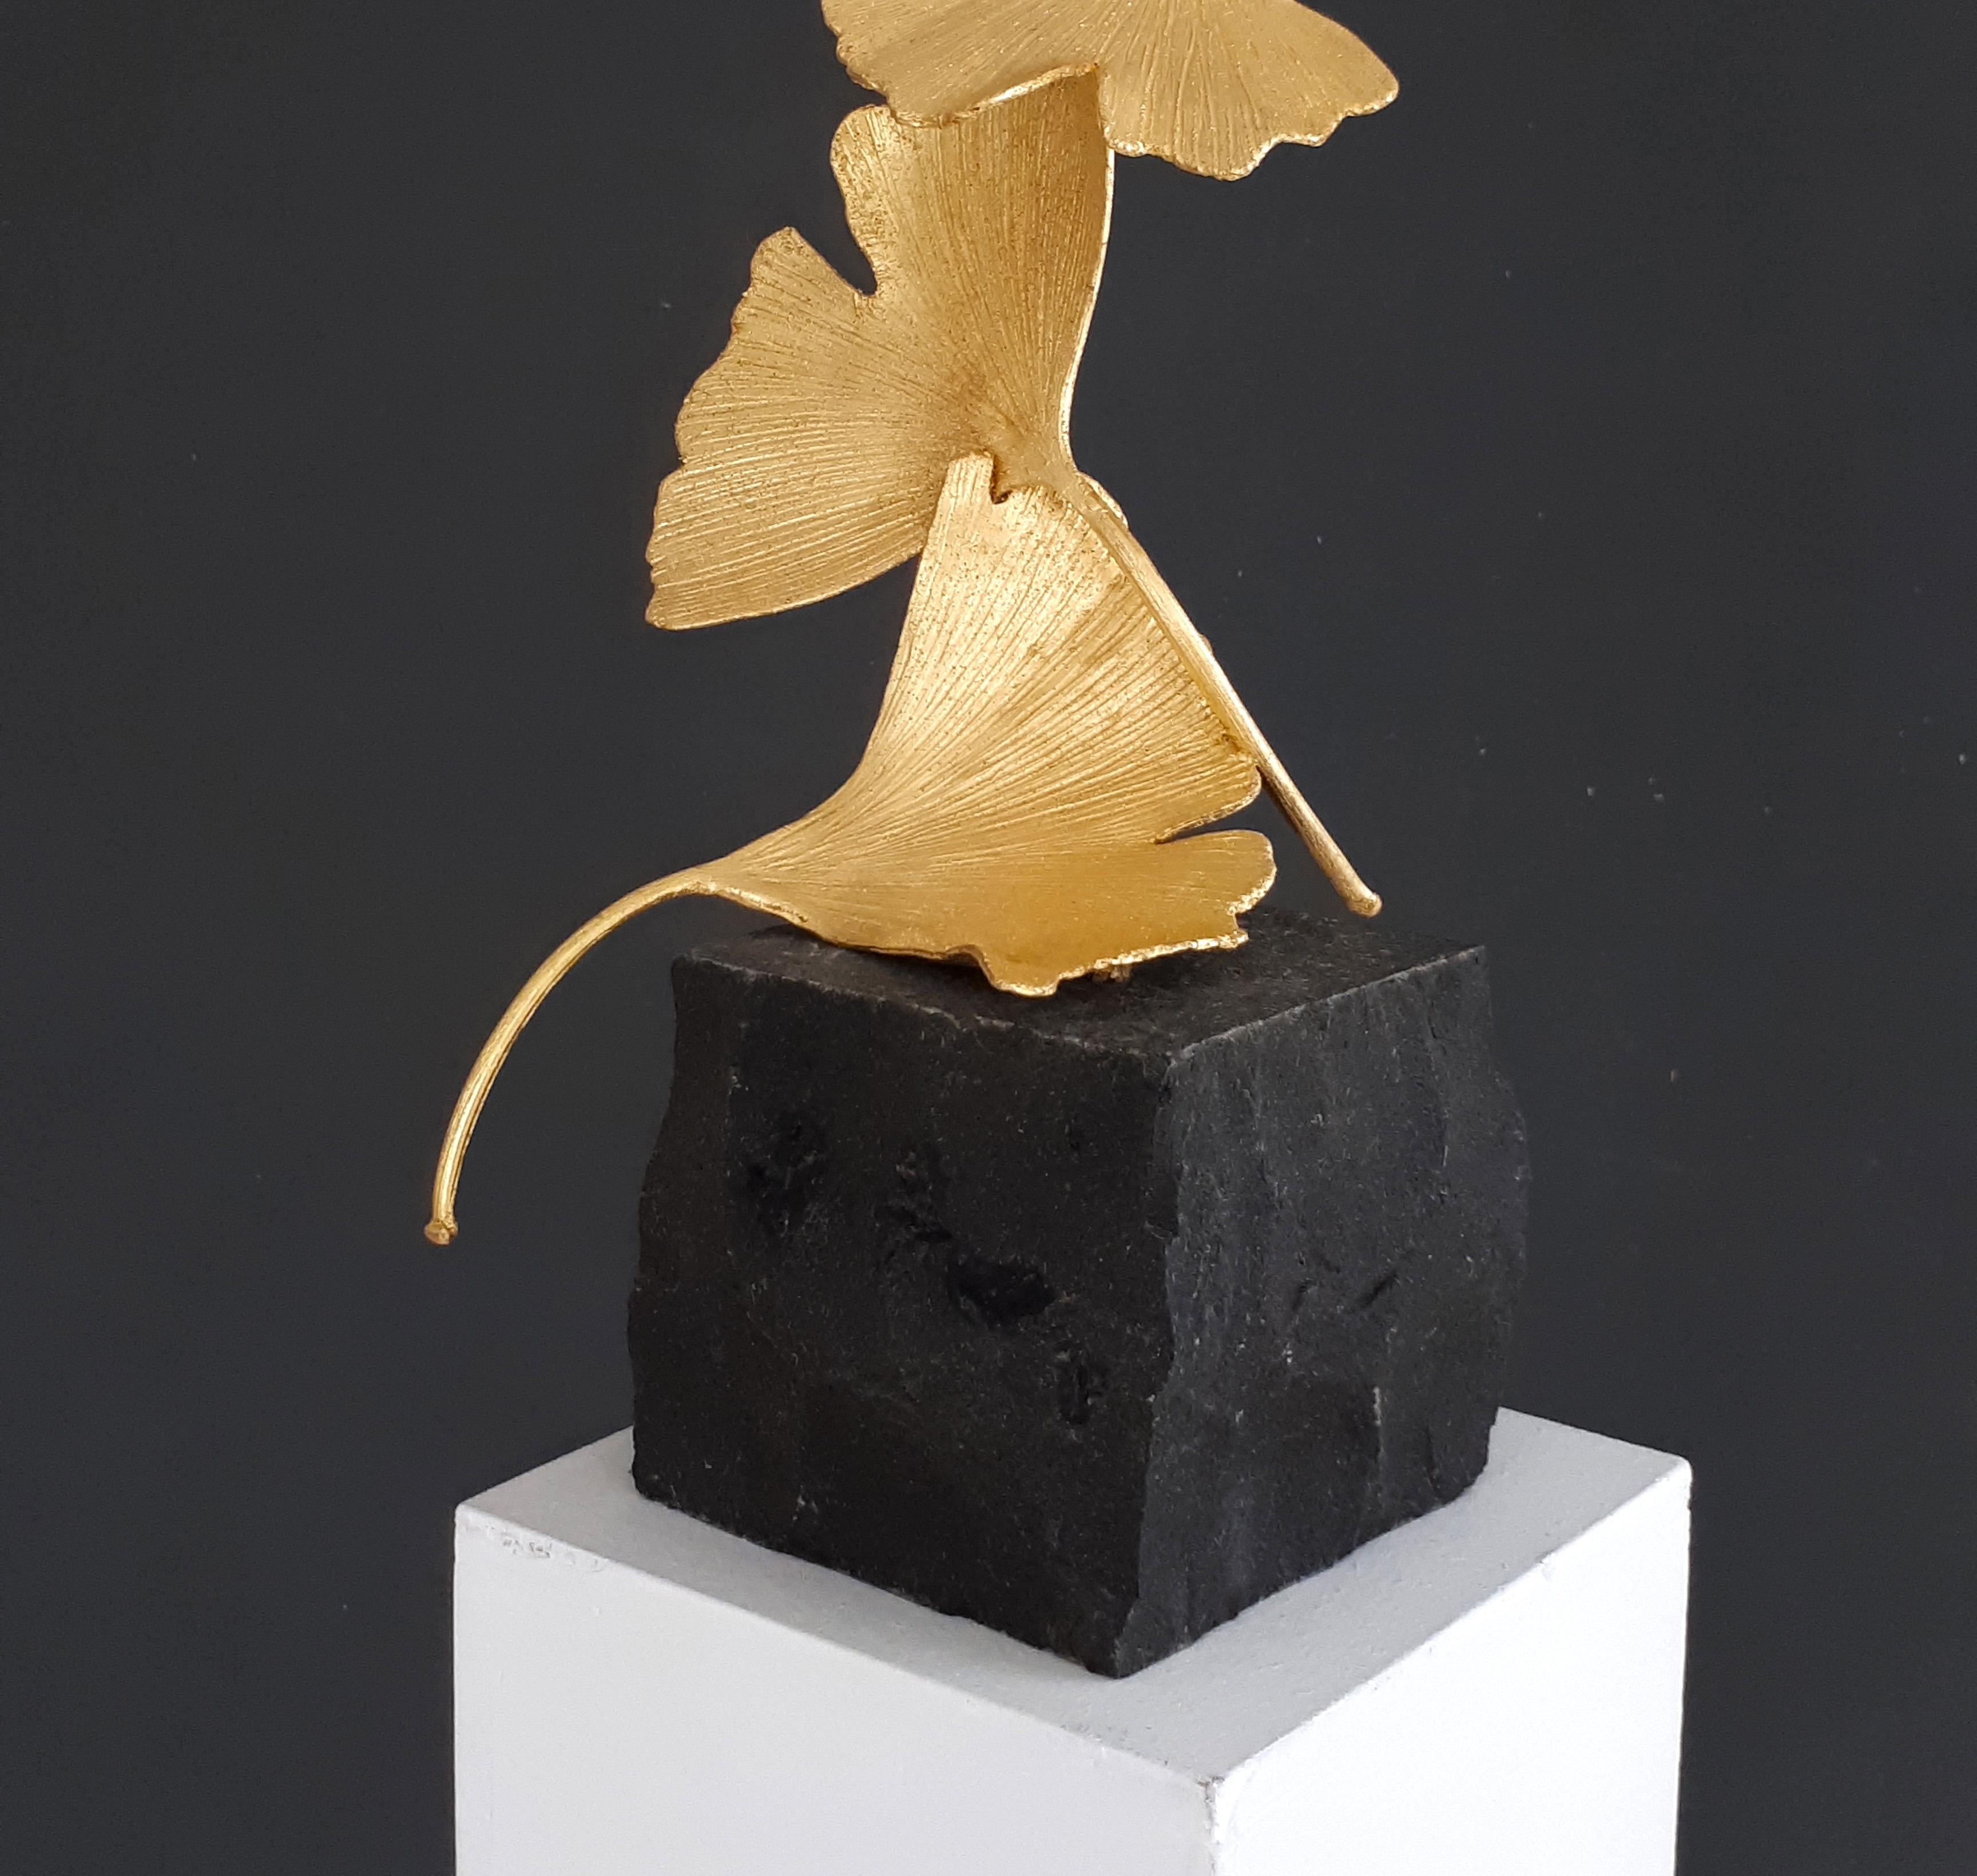 7 Golden Gingko Leaves - 24 k Gilded Cast Brass sculpture on black granite base - Black Abstract Sculpture by Kuno Vollet